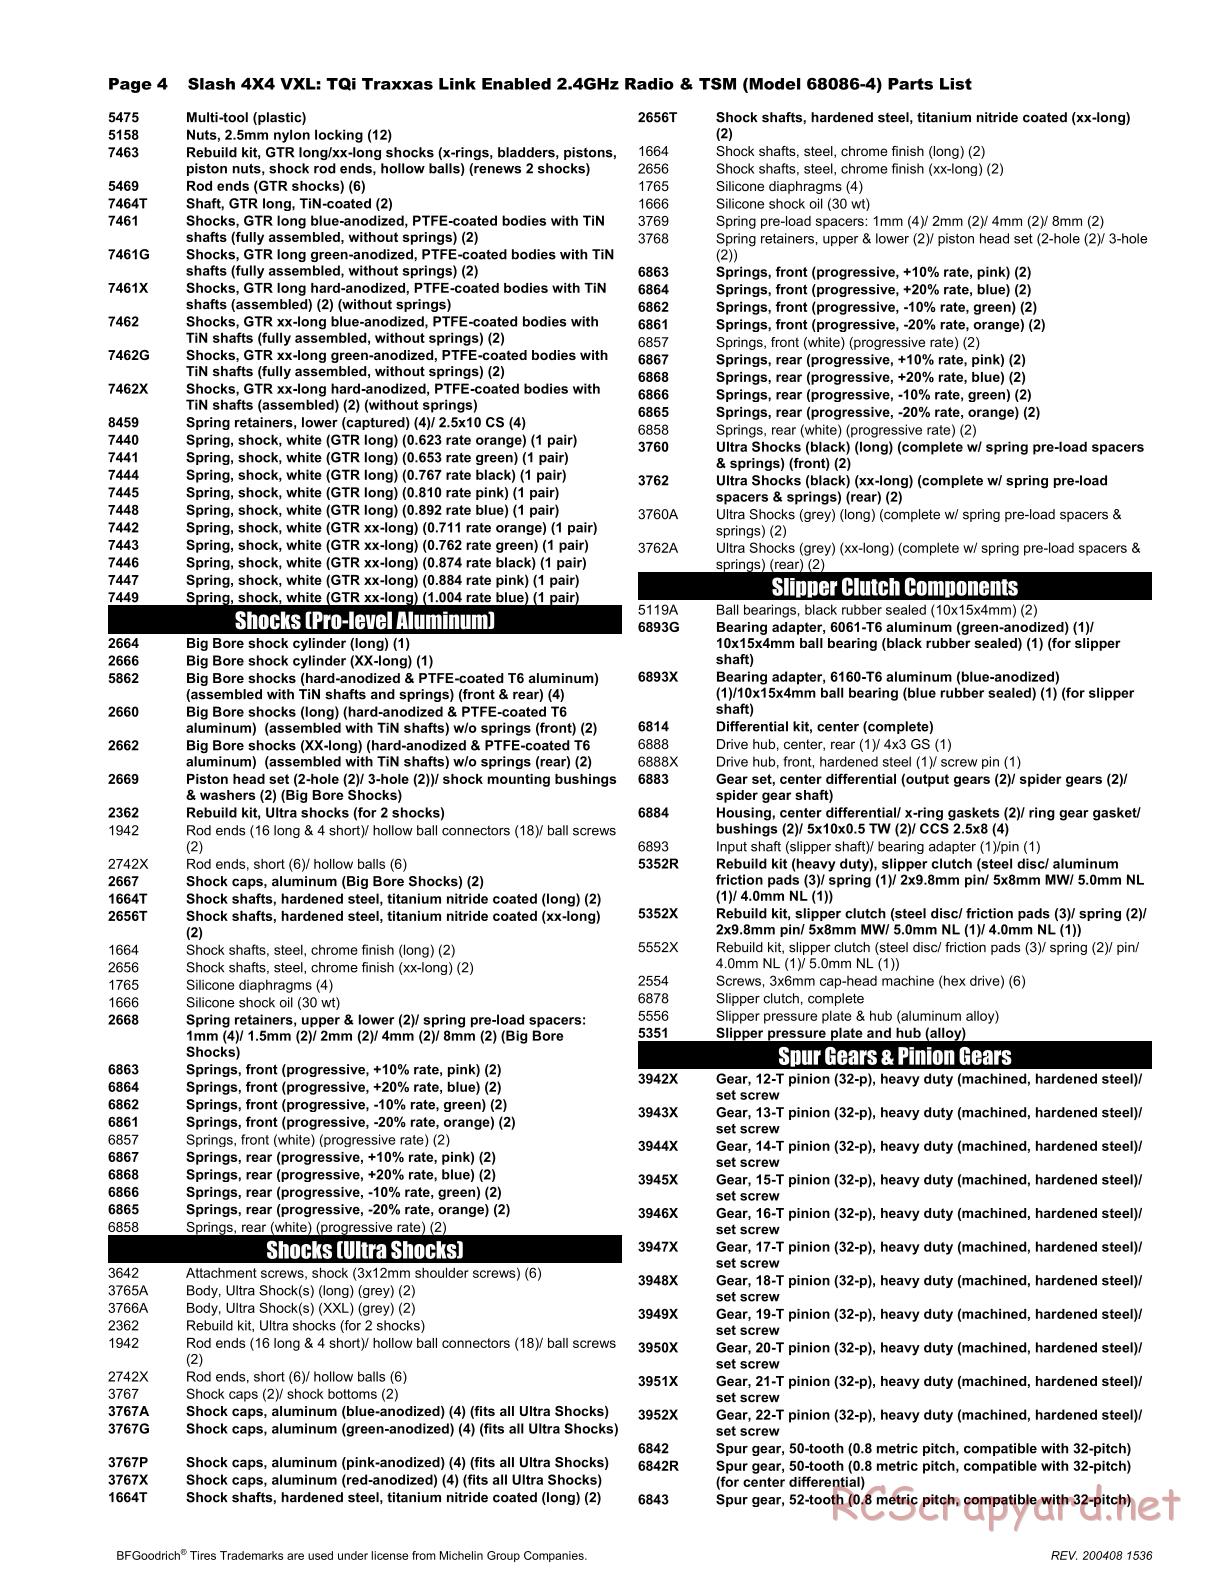 Traxxas - Slash 4x4 VXL - Parts List - Page 4